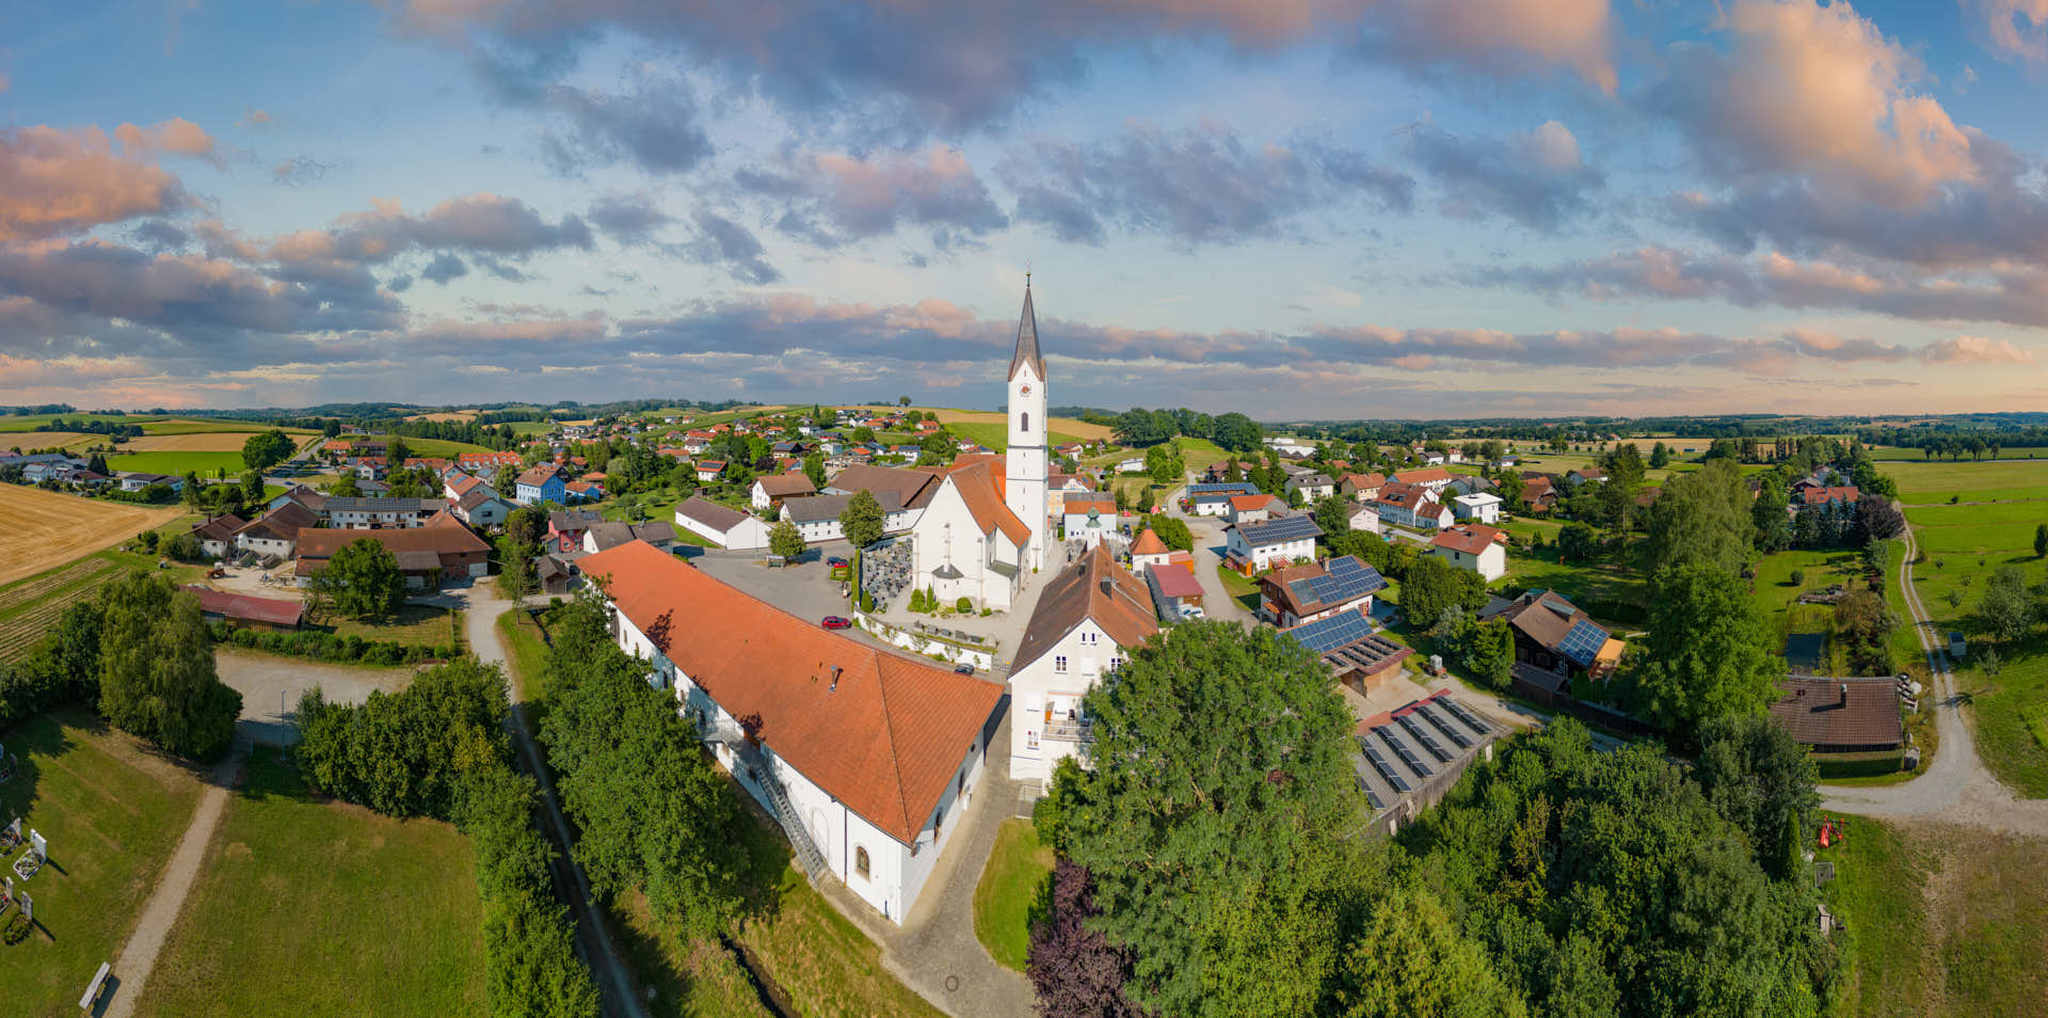 Pfarrkirche Maria Himmelfahrt Karpfham - Bad Griesbach